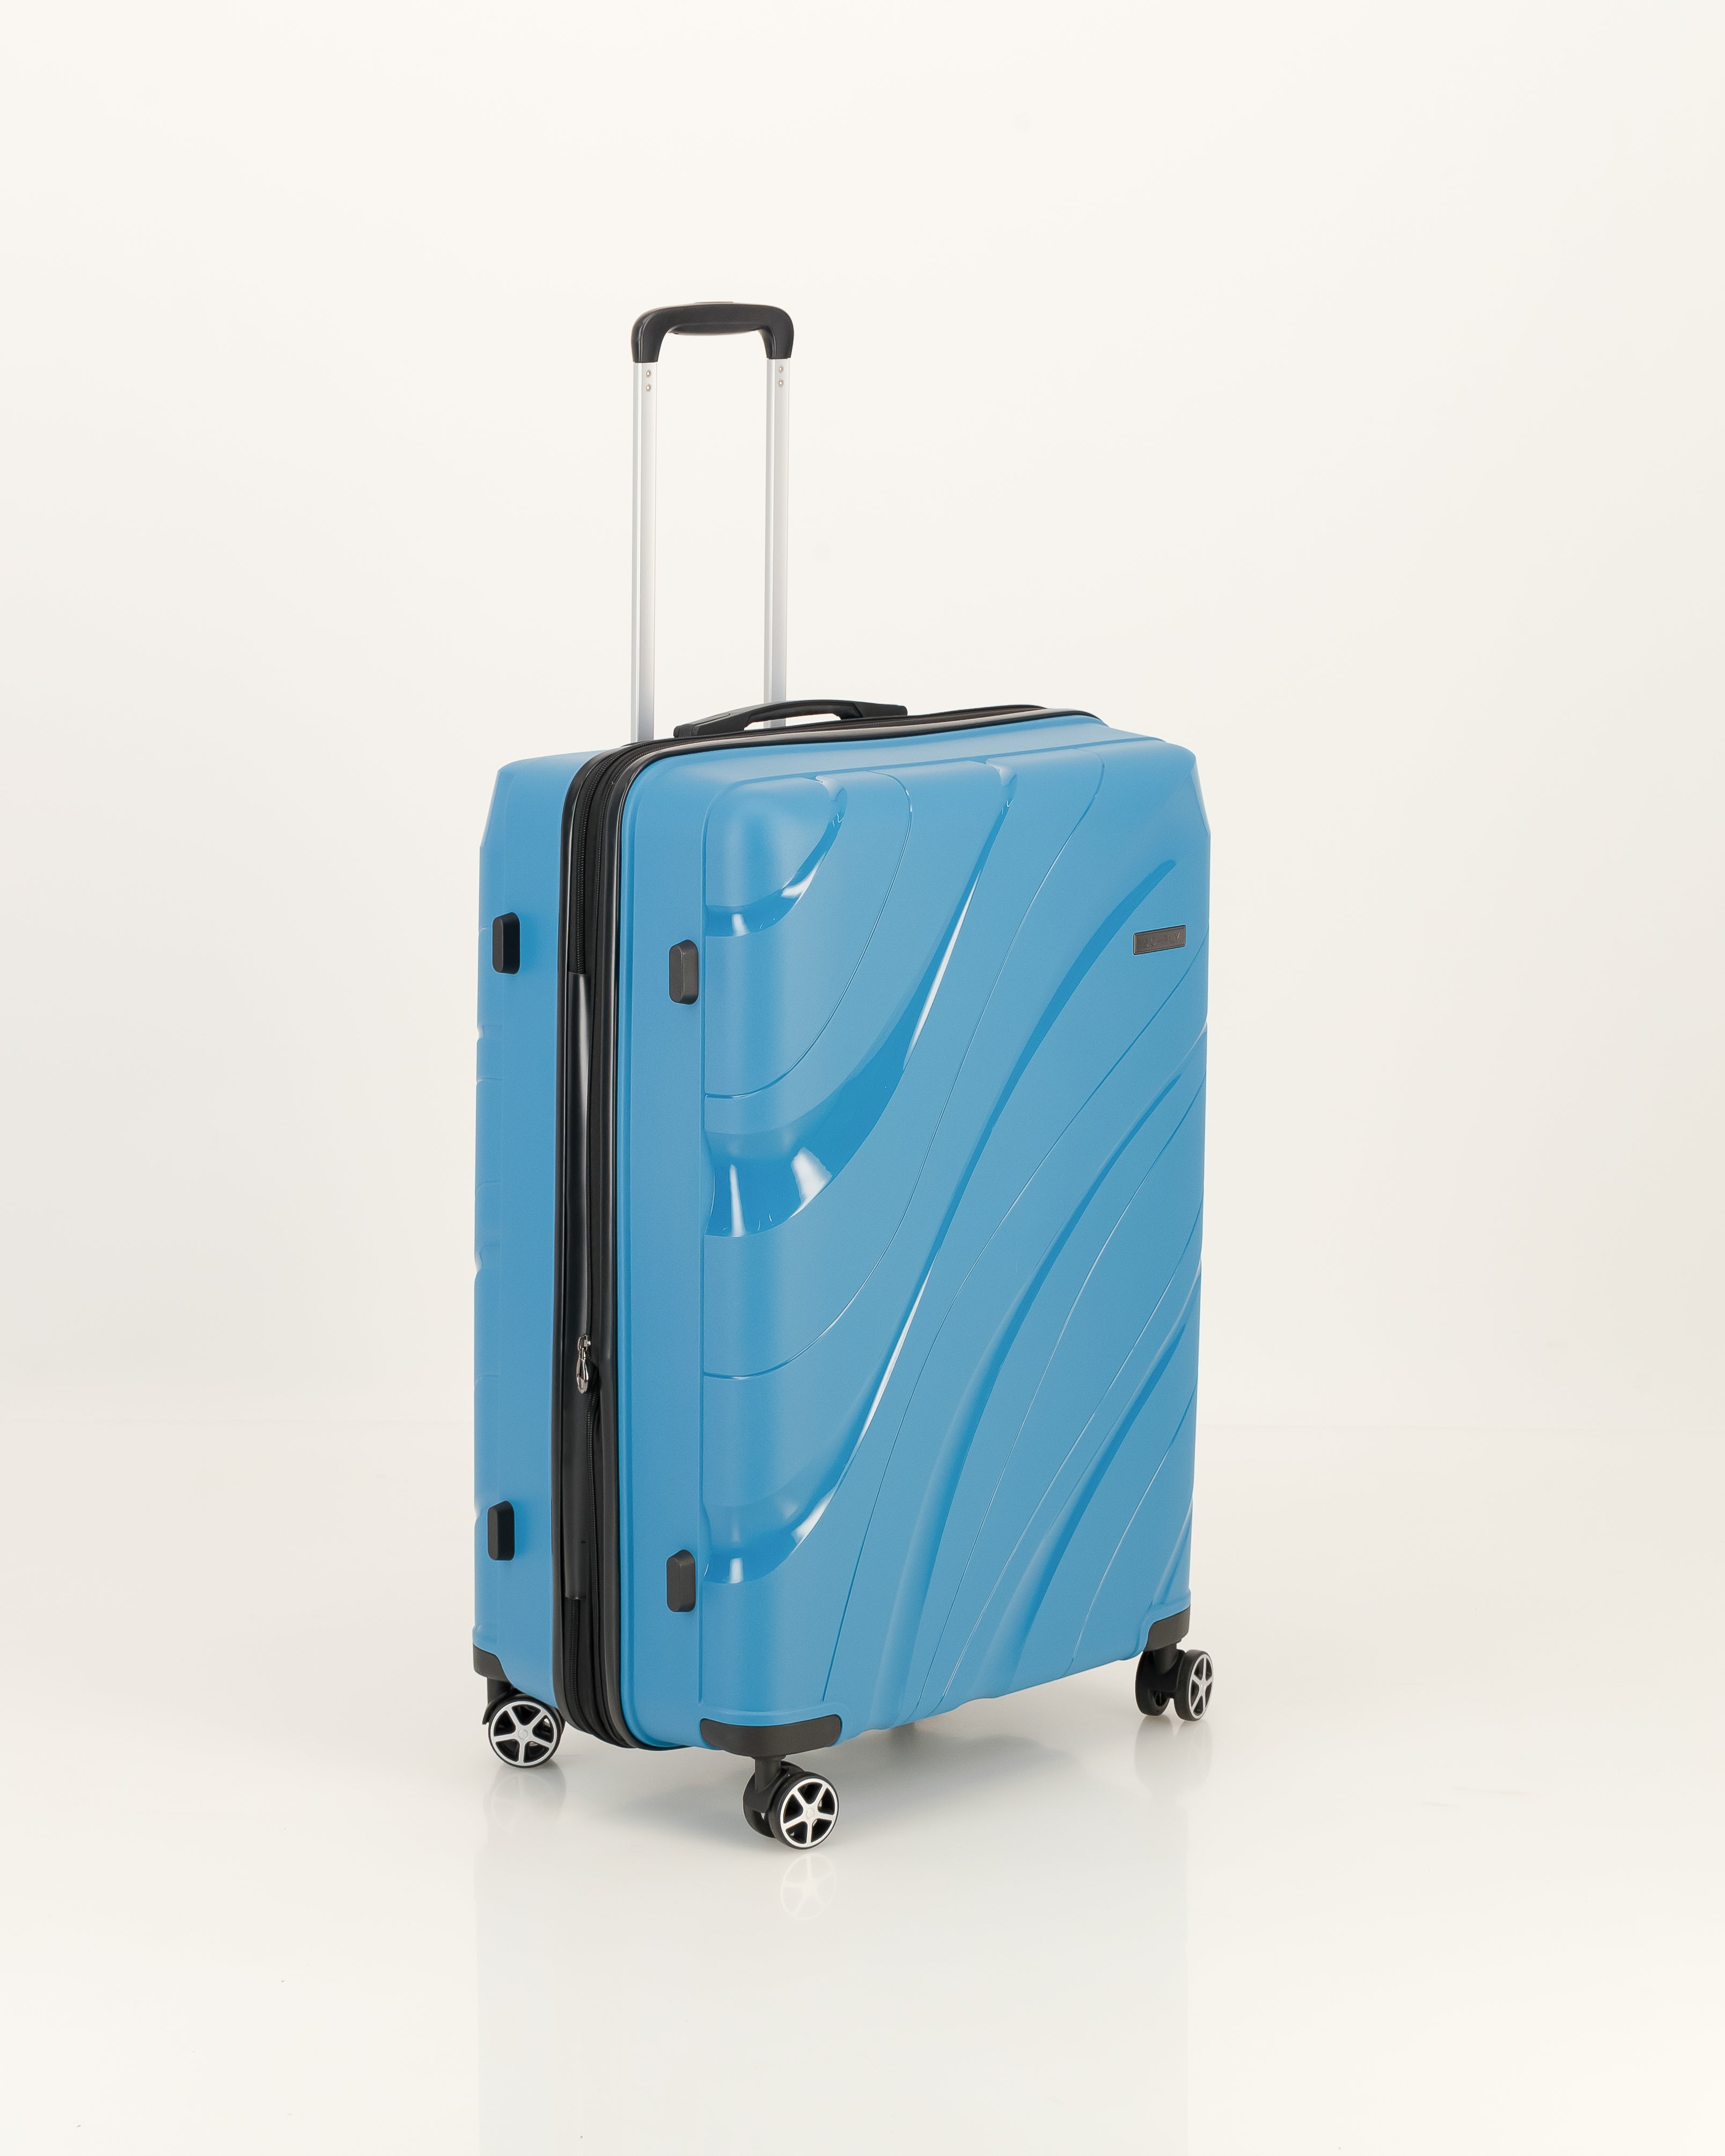 So-Fly Orbit 65cm Spinner Luggage